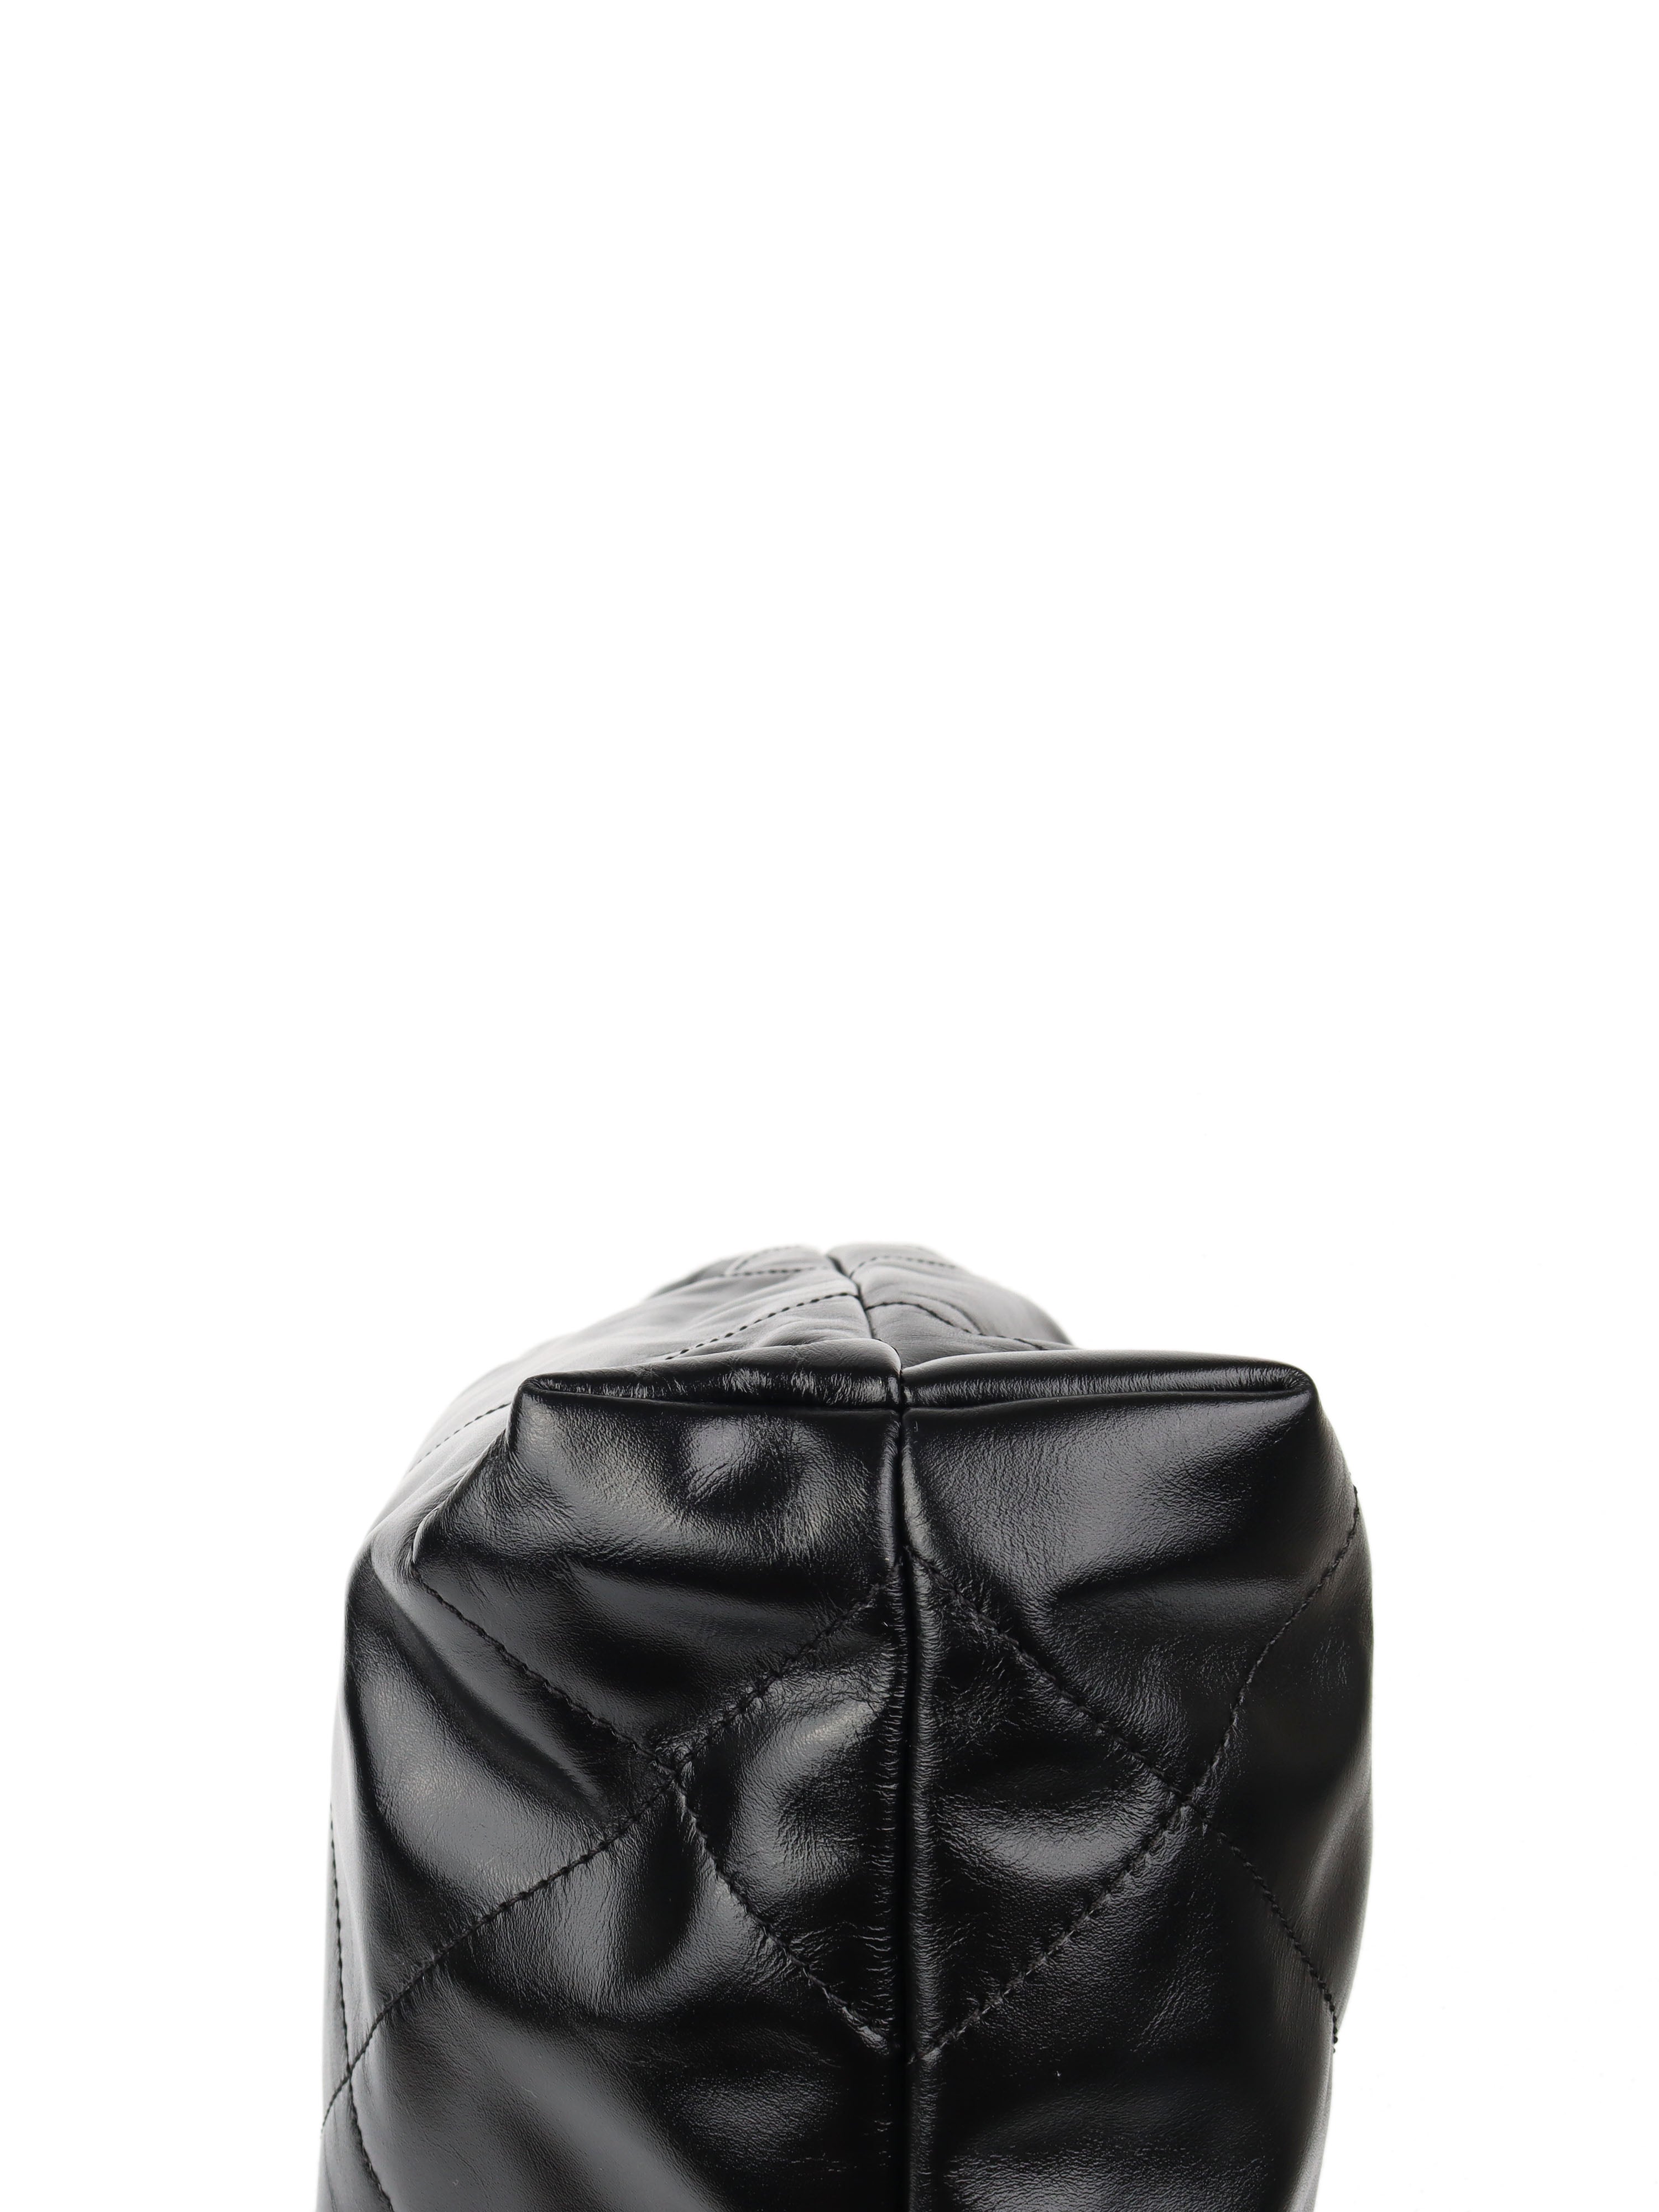 Chanel Black Small 22 Bag